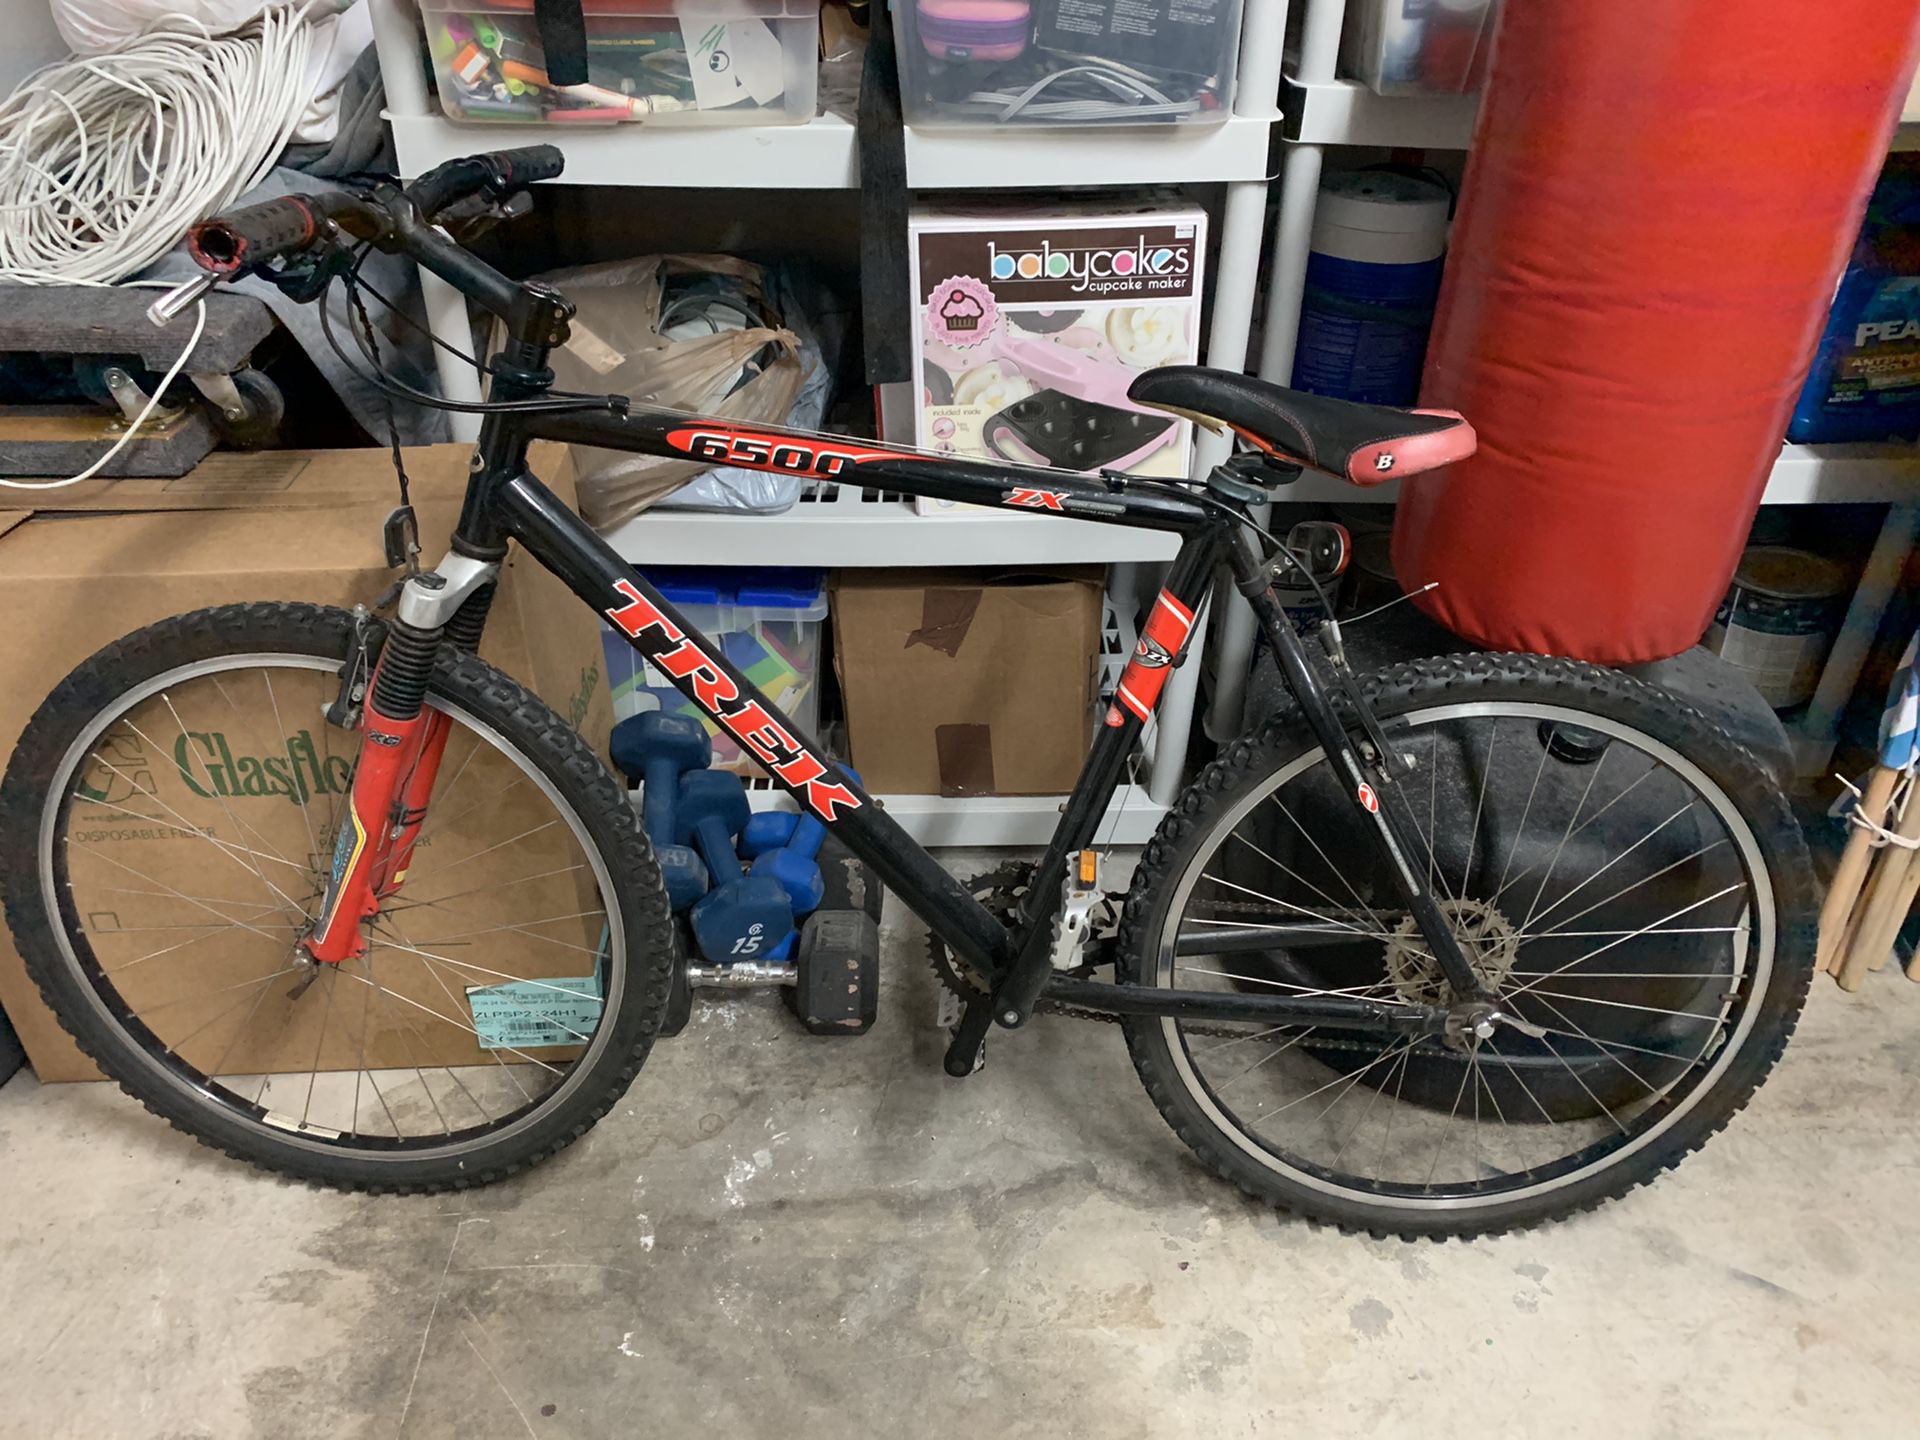 Trek mountain bike $75